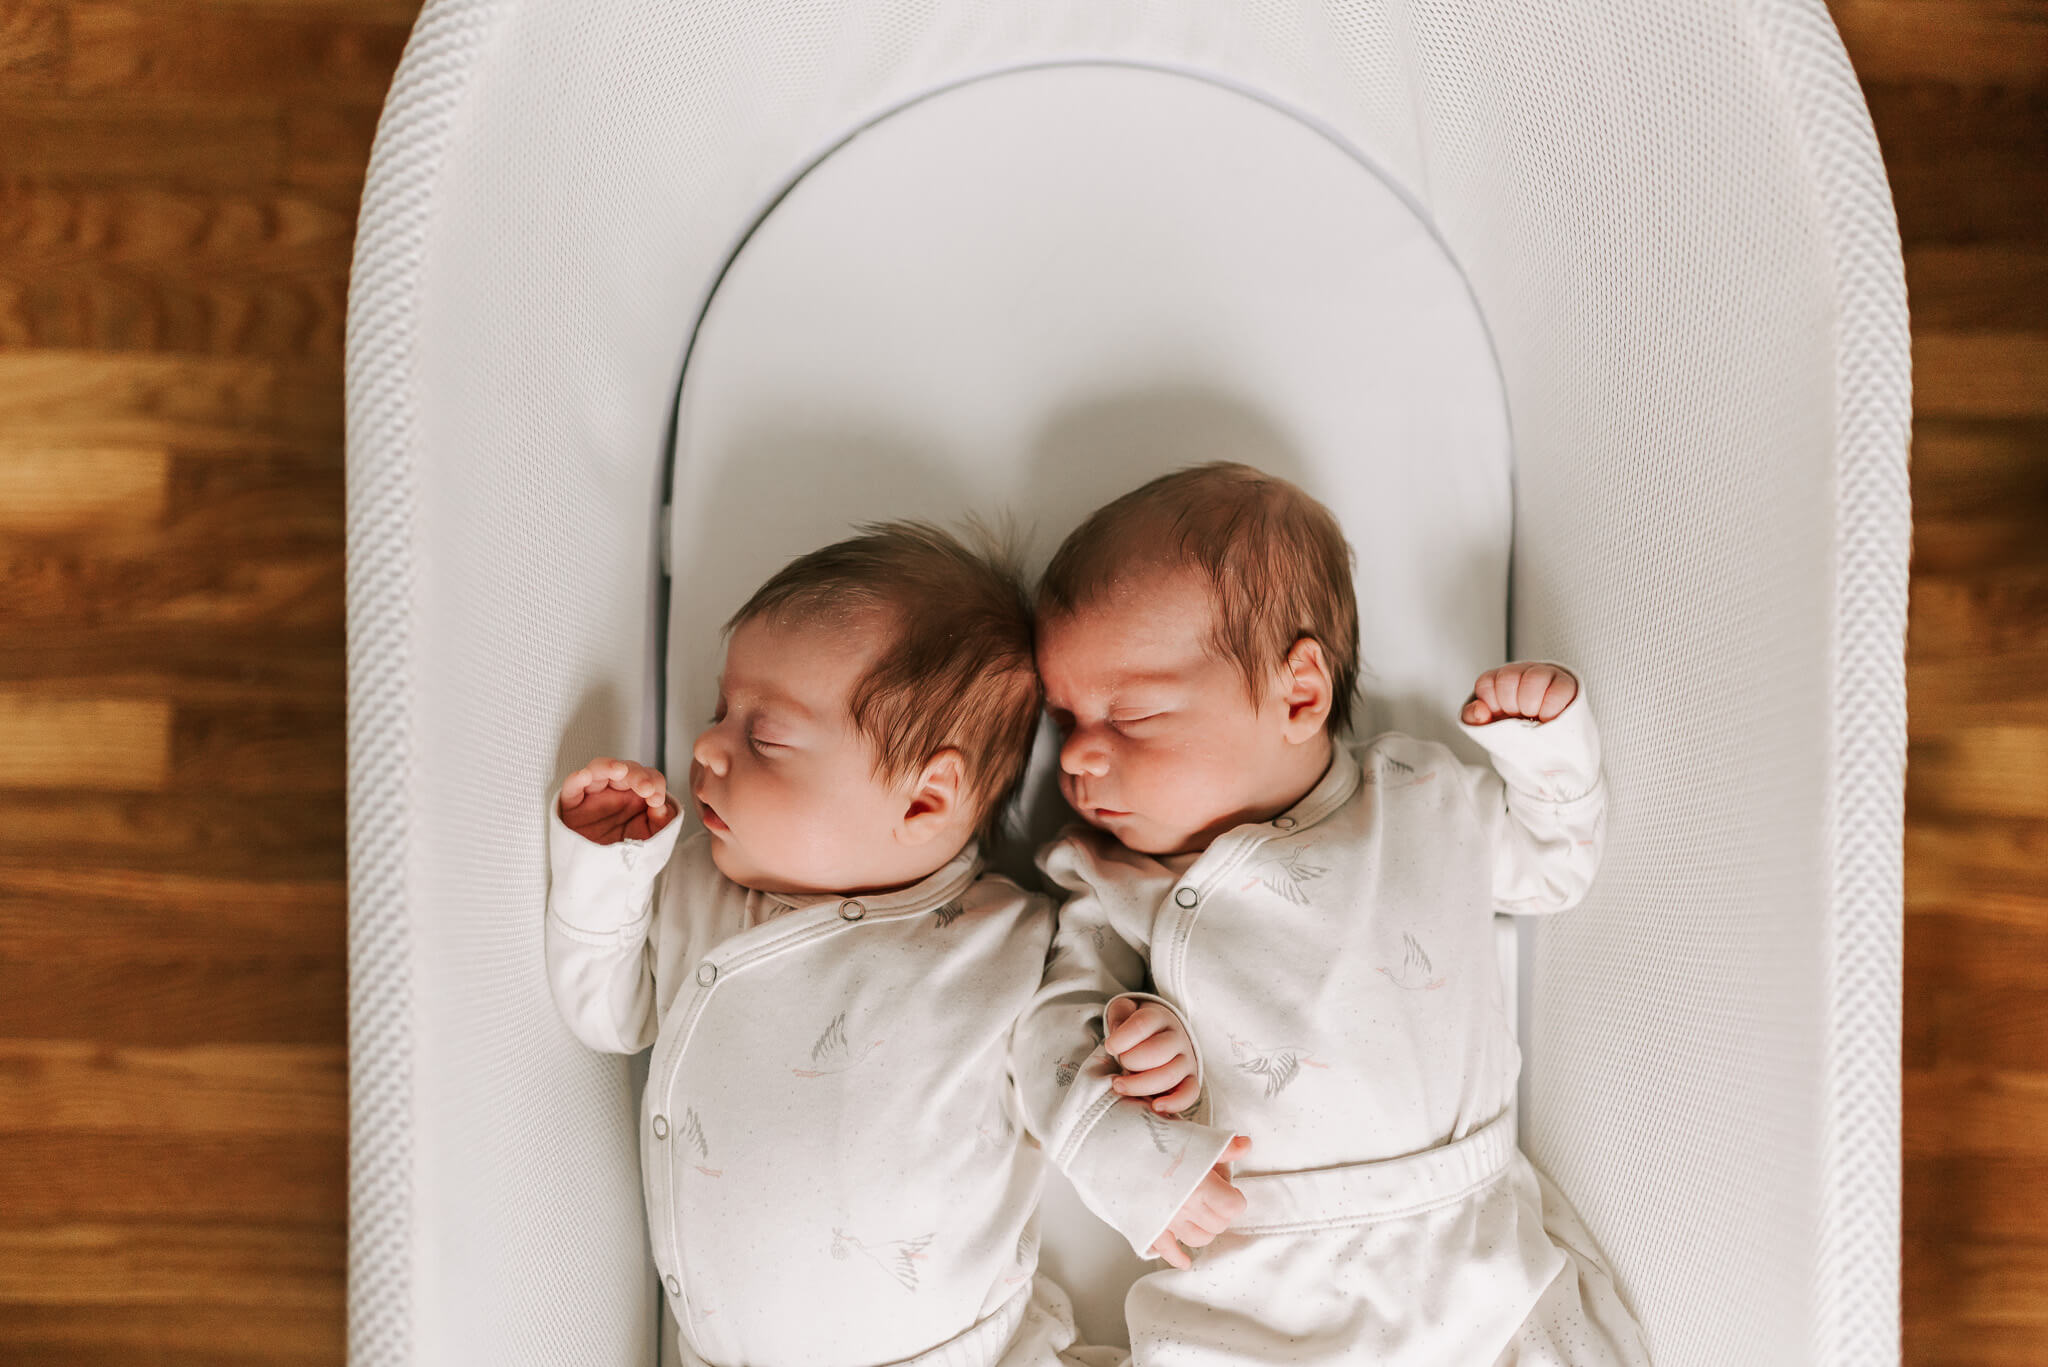 newborn twins sleeping together in a snoo